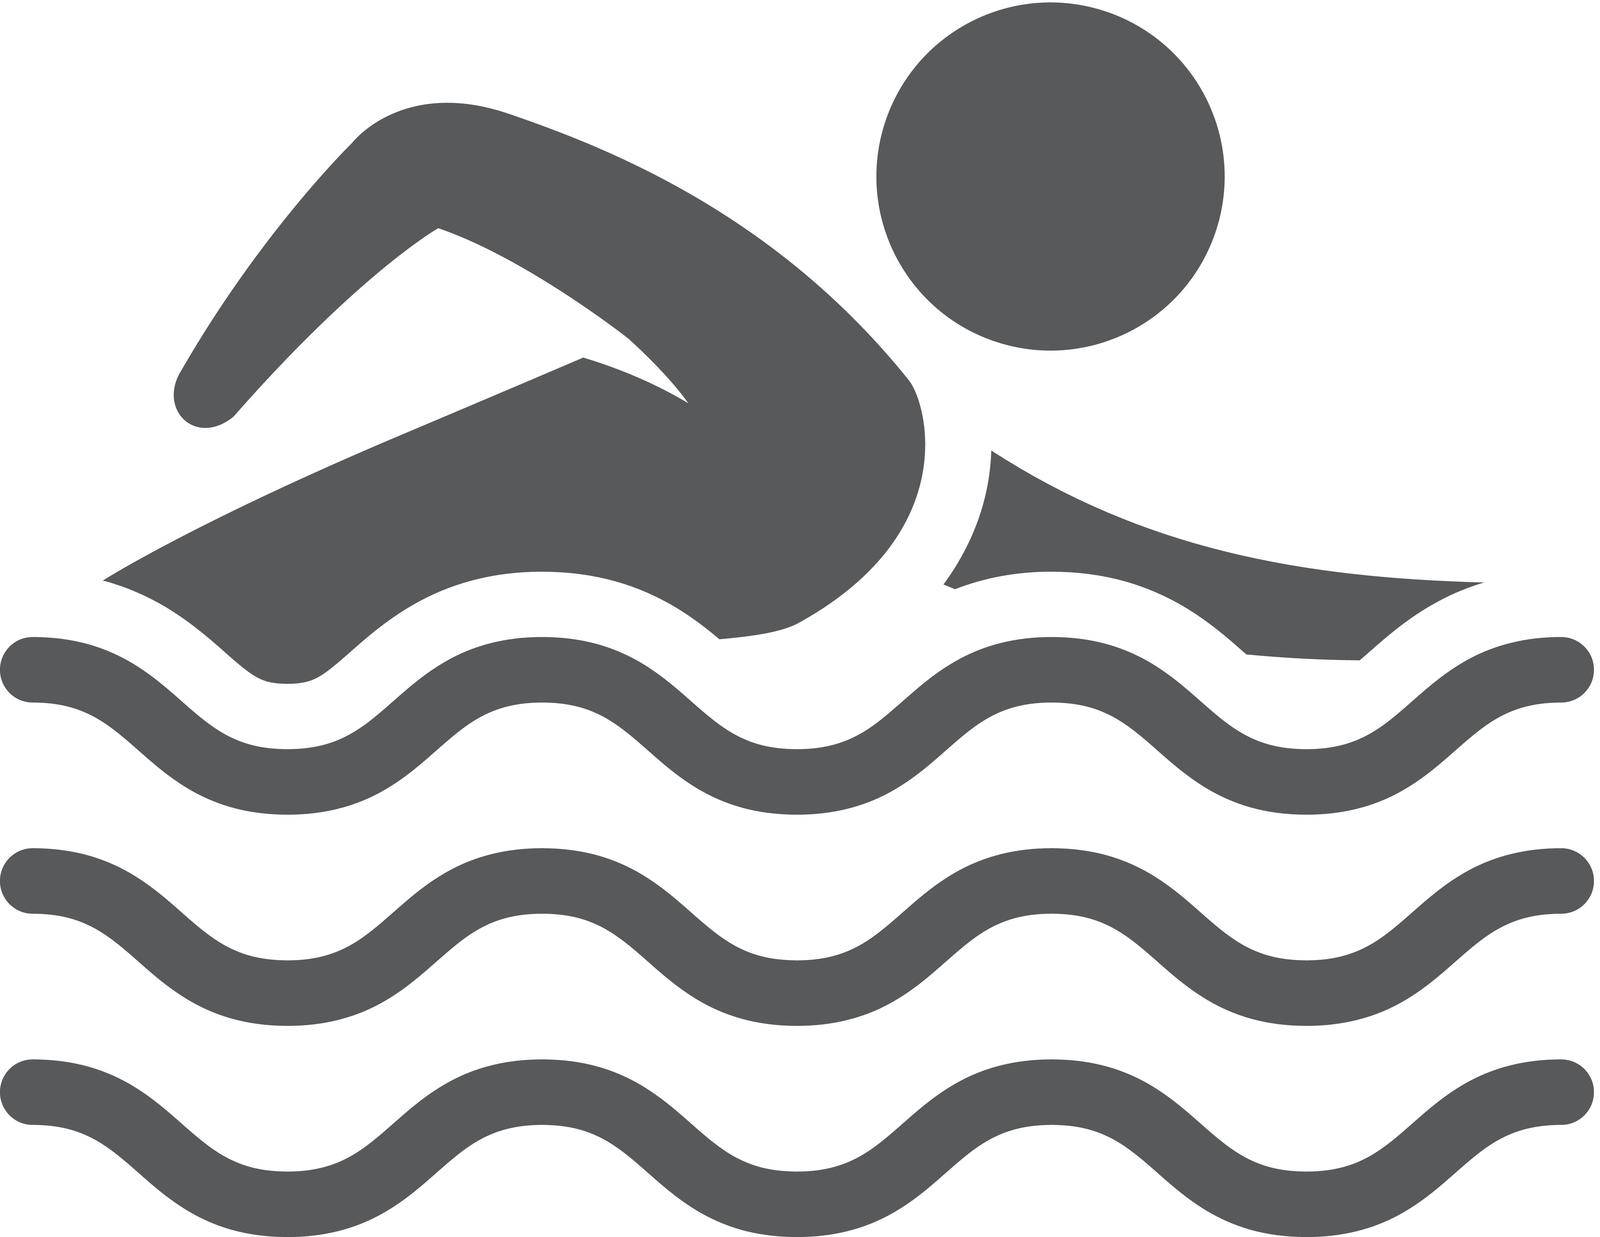 Man swimming icon in single grey color. Athlete triathlon olympics olympian sport